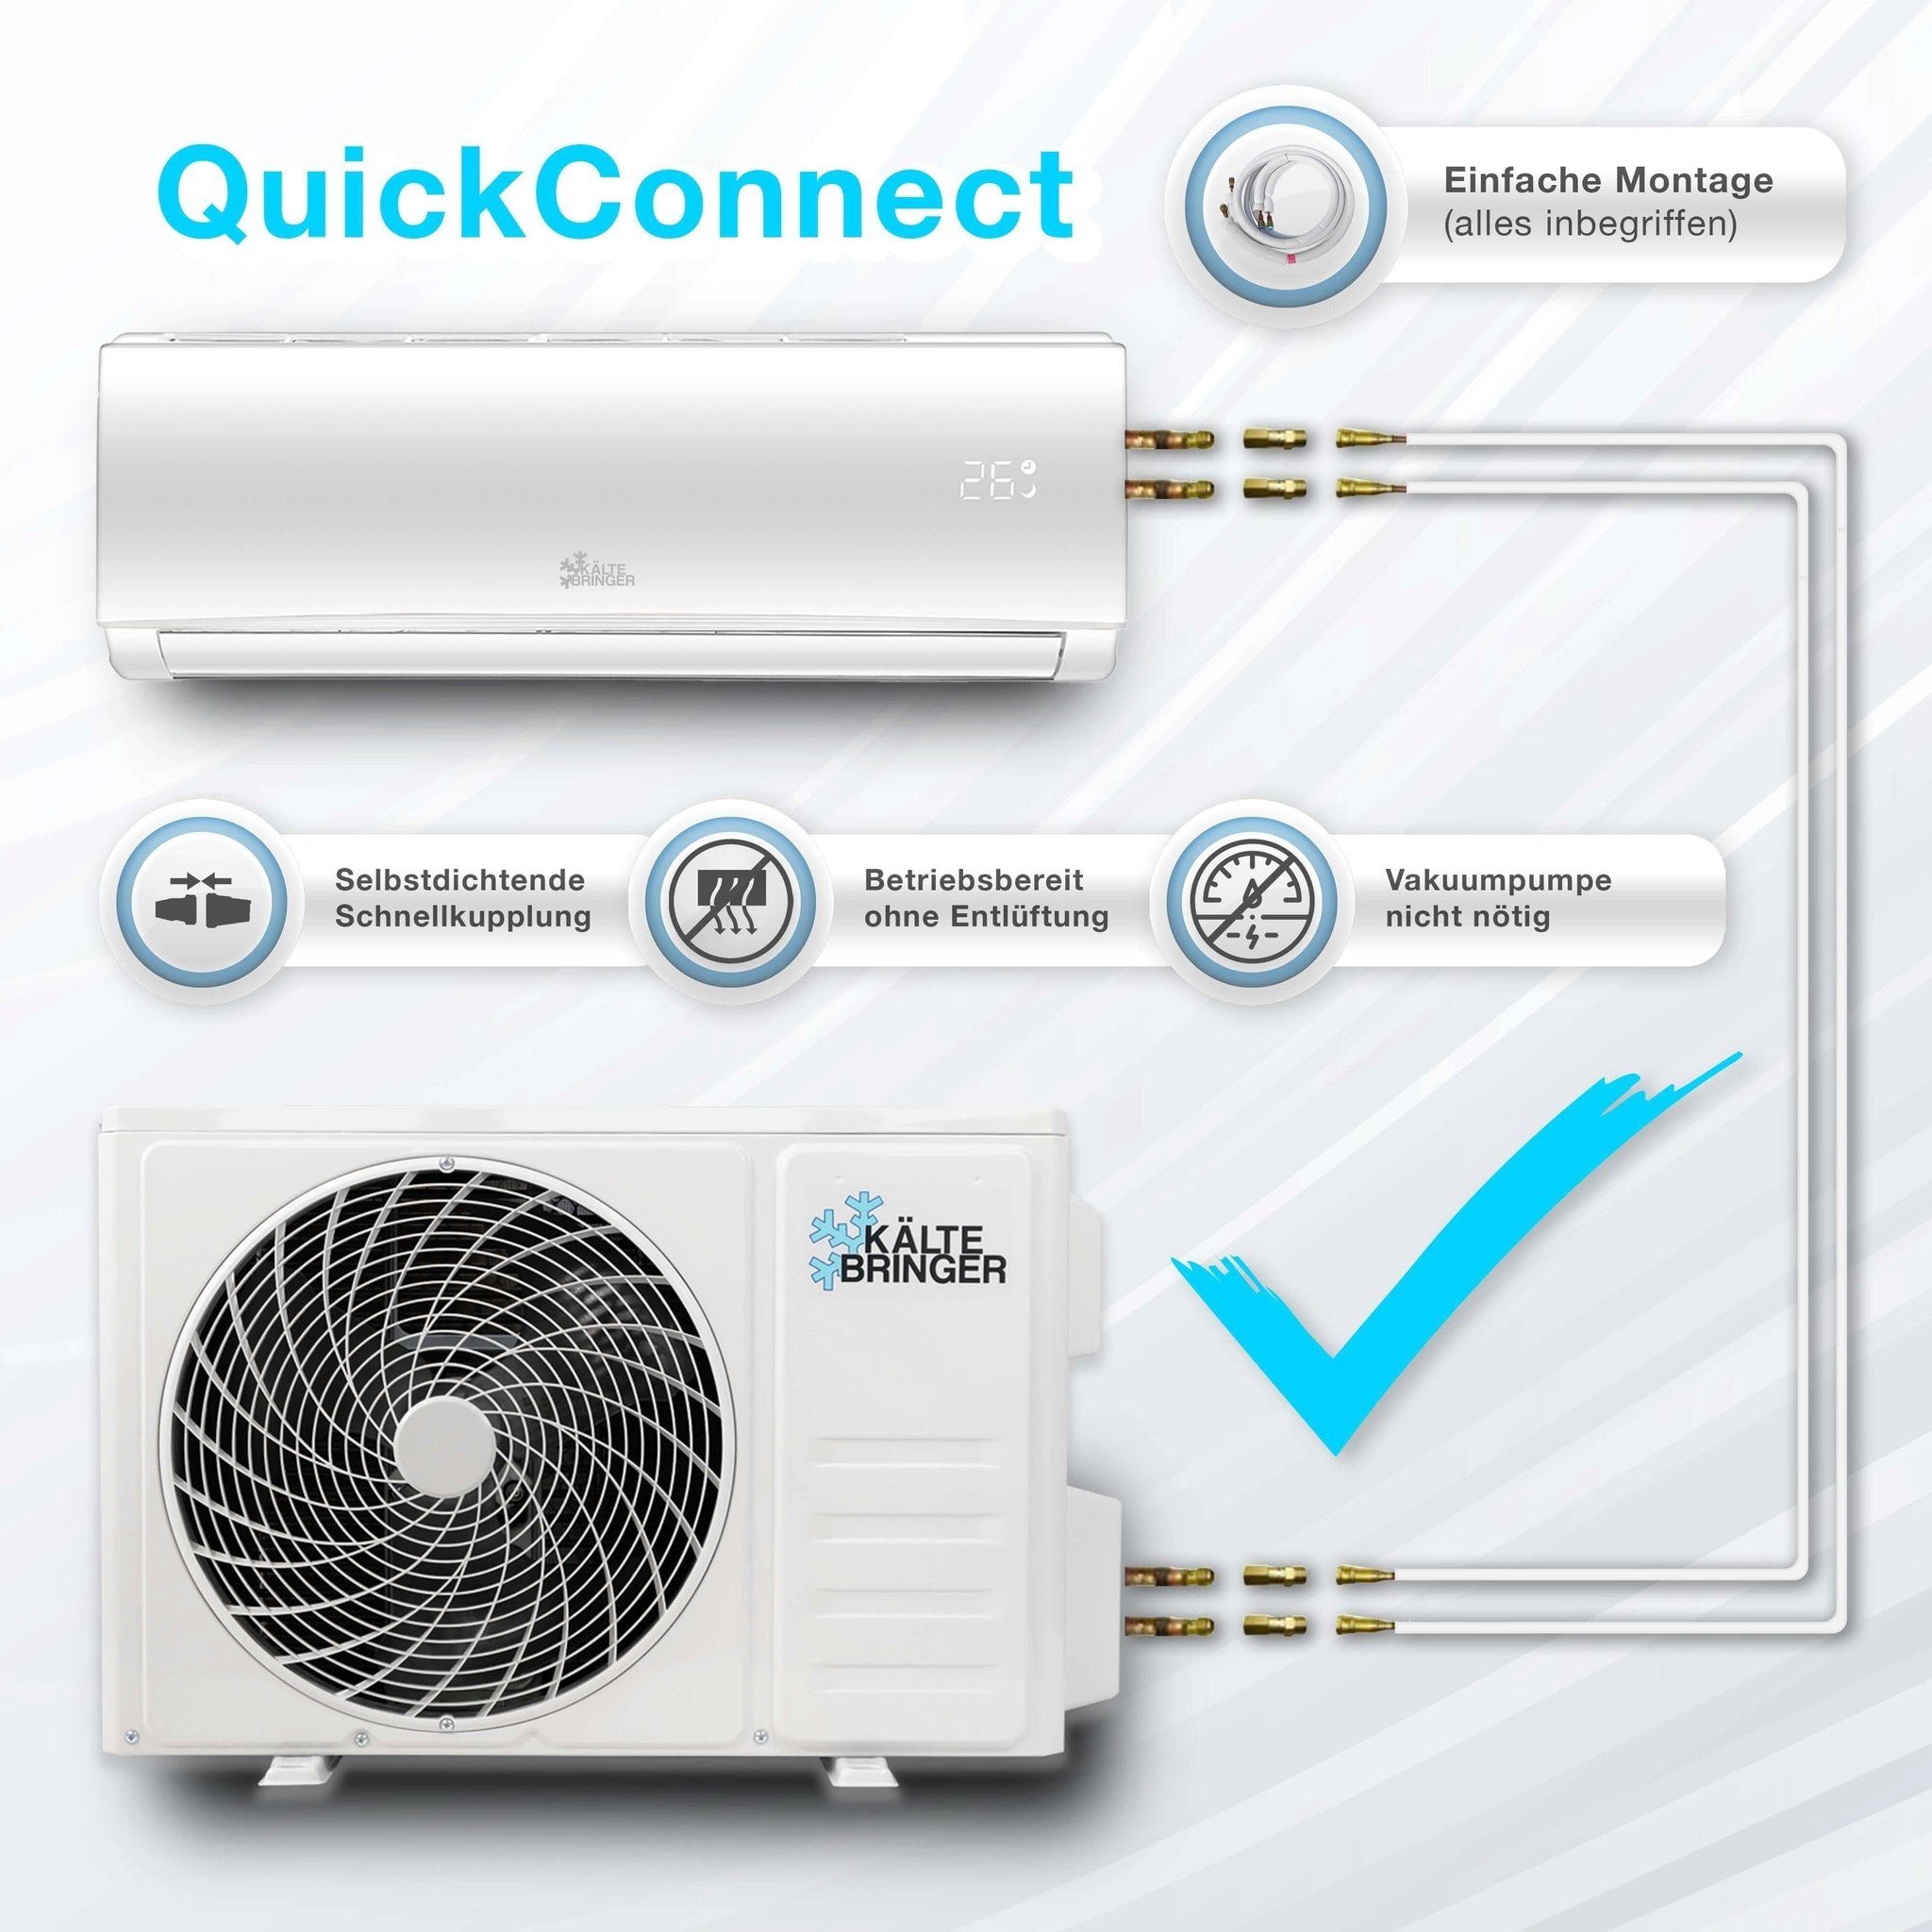 Smart Set KB34-QC, Split-Klimagerät Bodenkonsole Connect inkl. 3,4kW, Split Kältebringer Klimaanlage, Kühlen/Heizen, App, Quick